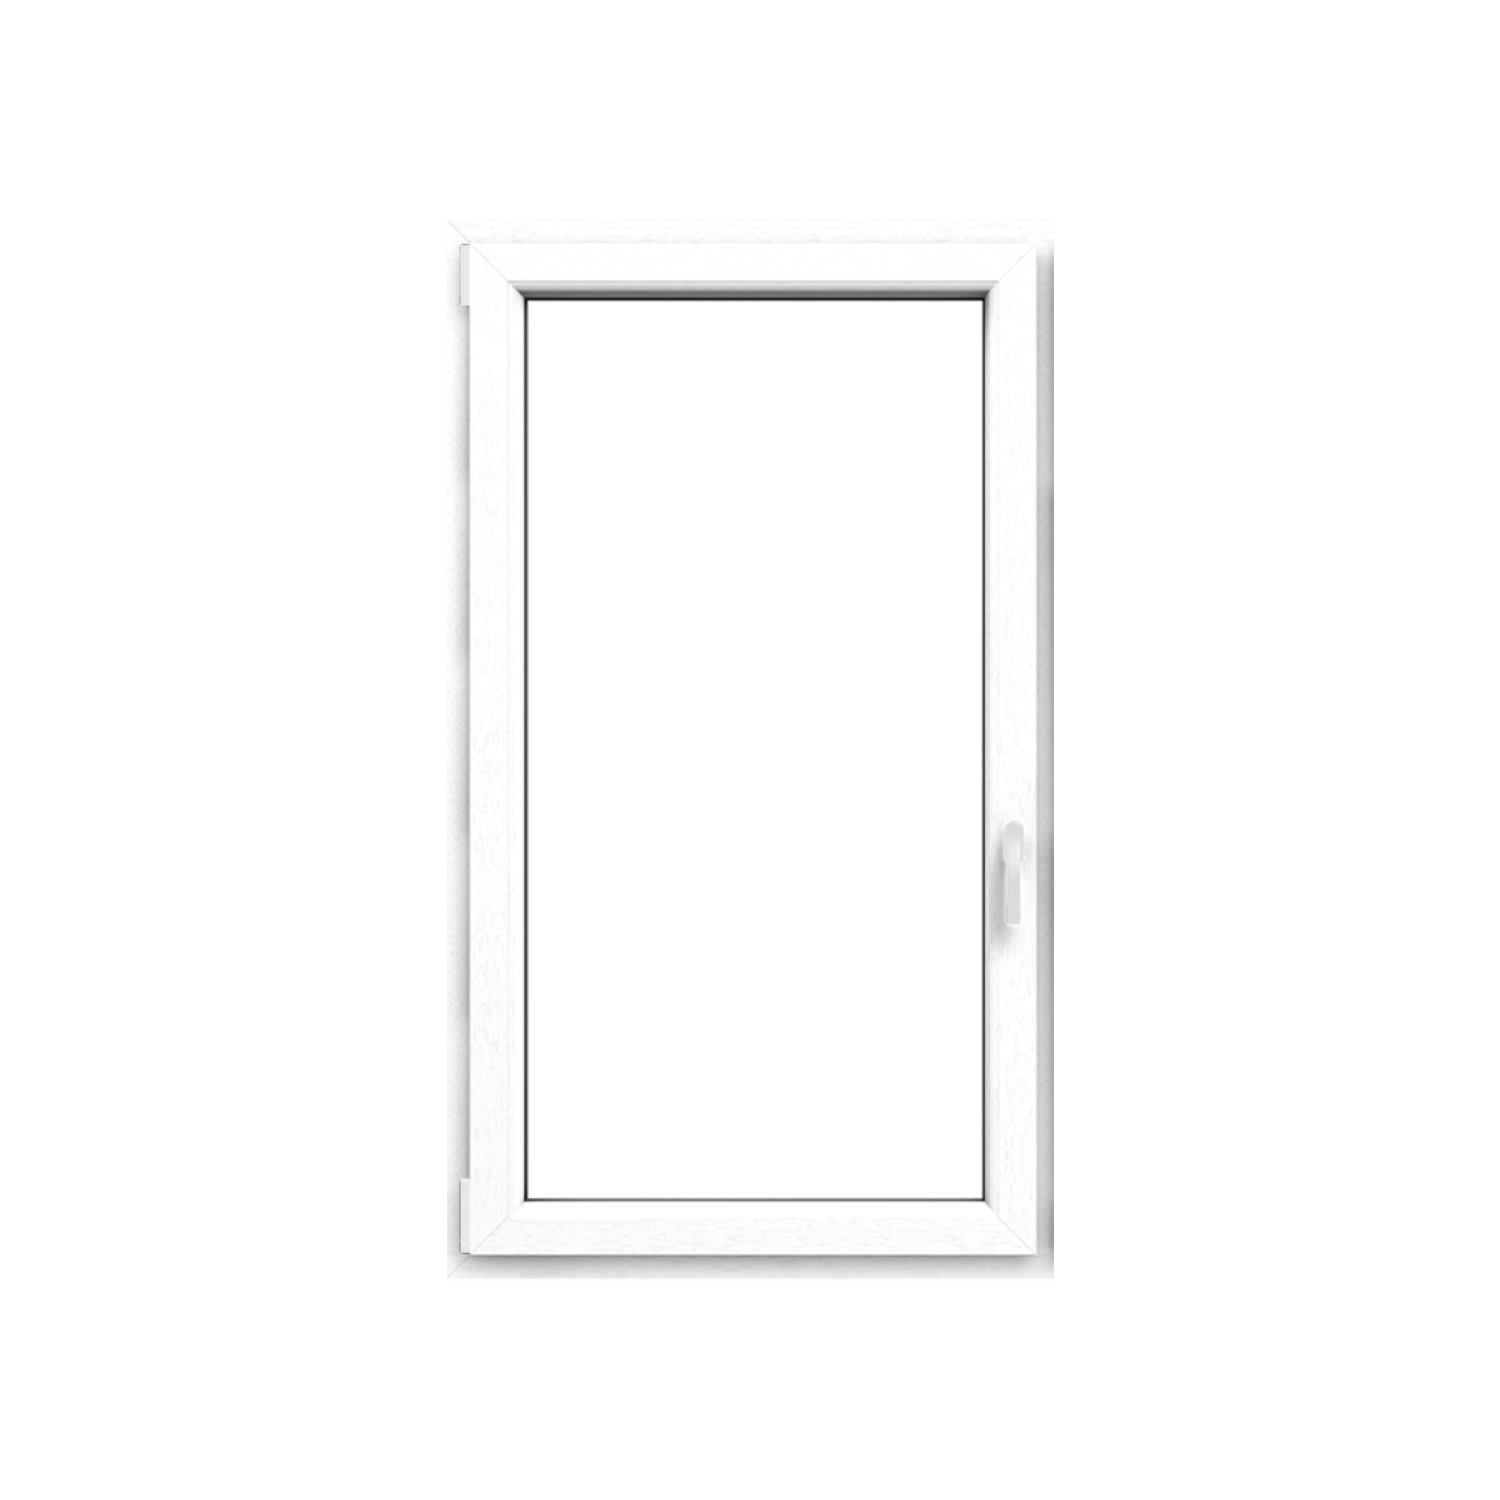 Okno plastové EKOSUN 6 bílé, OS1A 60x90 L, trojsklo, 6kom/81mm (vč. kliky)